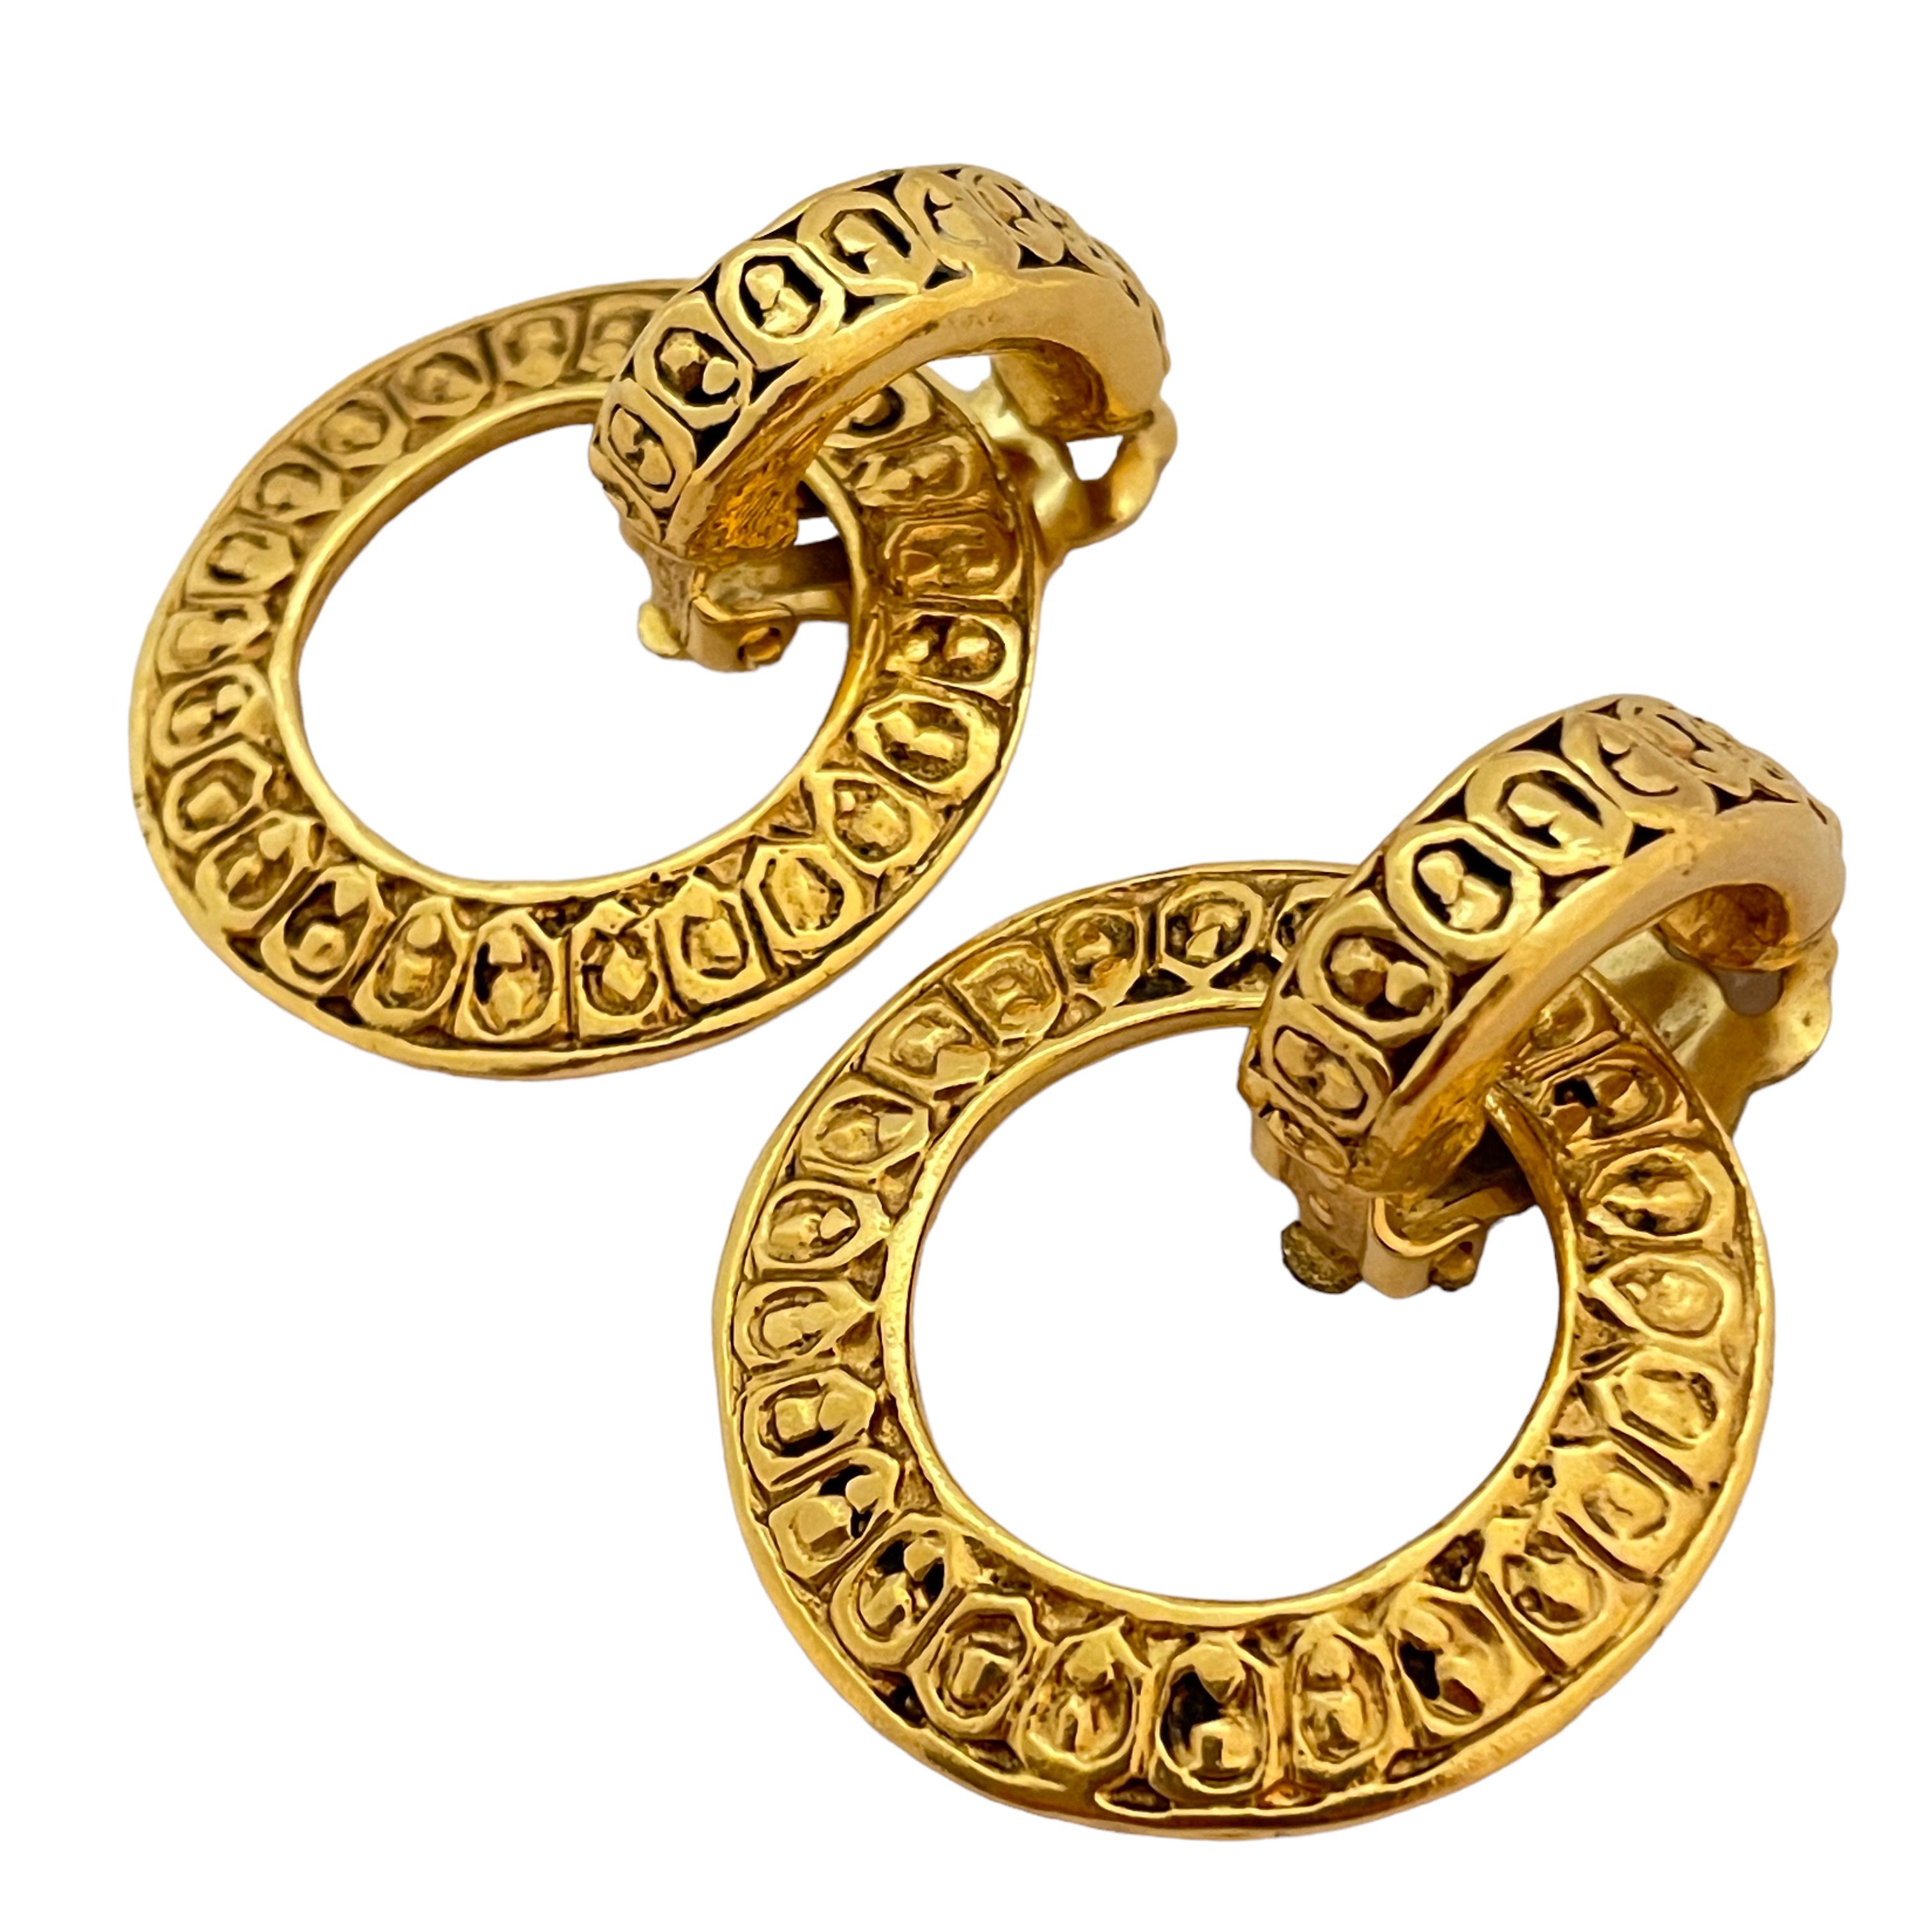 DETAILS

• signed CHANEL Made in France

• gold plated 

• vintage designer clip on earrings

MEASUREMENTS

• 1.75